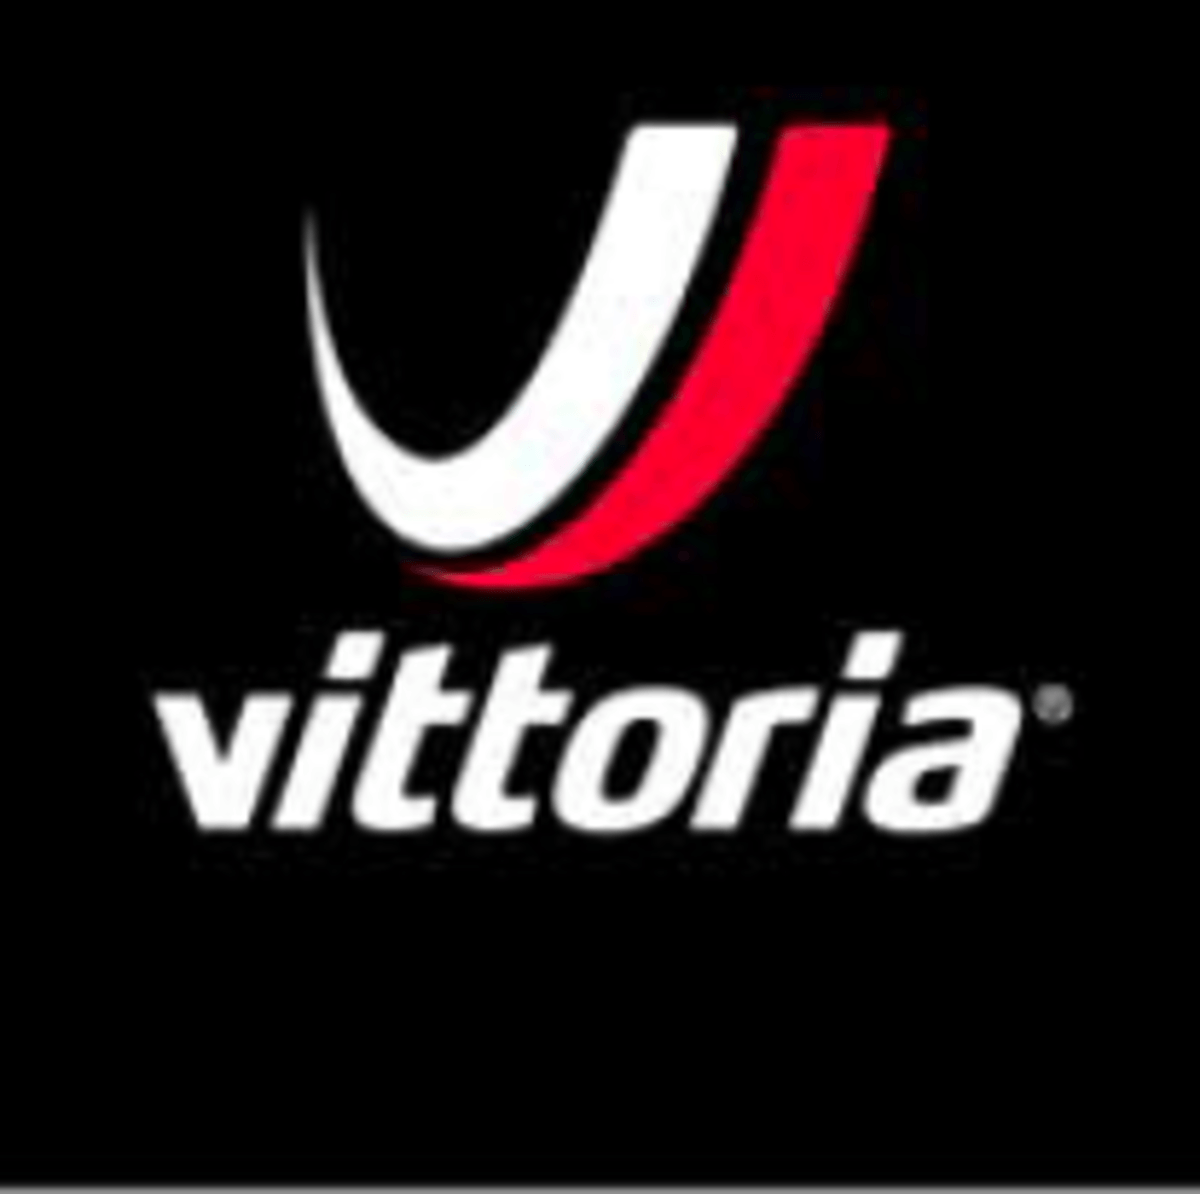 Vittoria Logo - Vittoria badge to replace Geax logo on all tyres